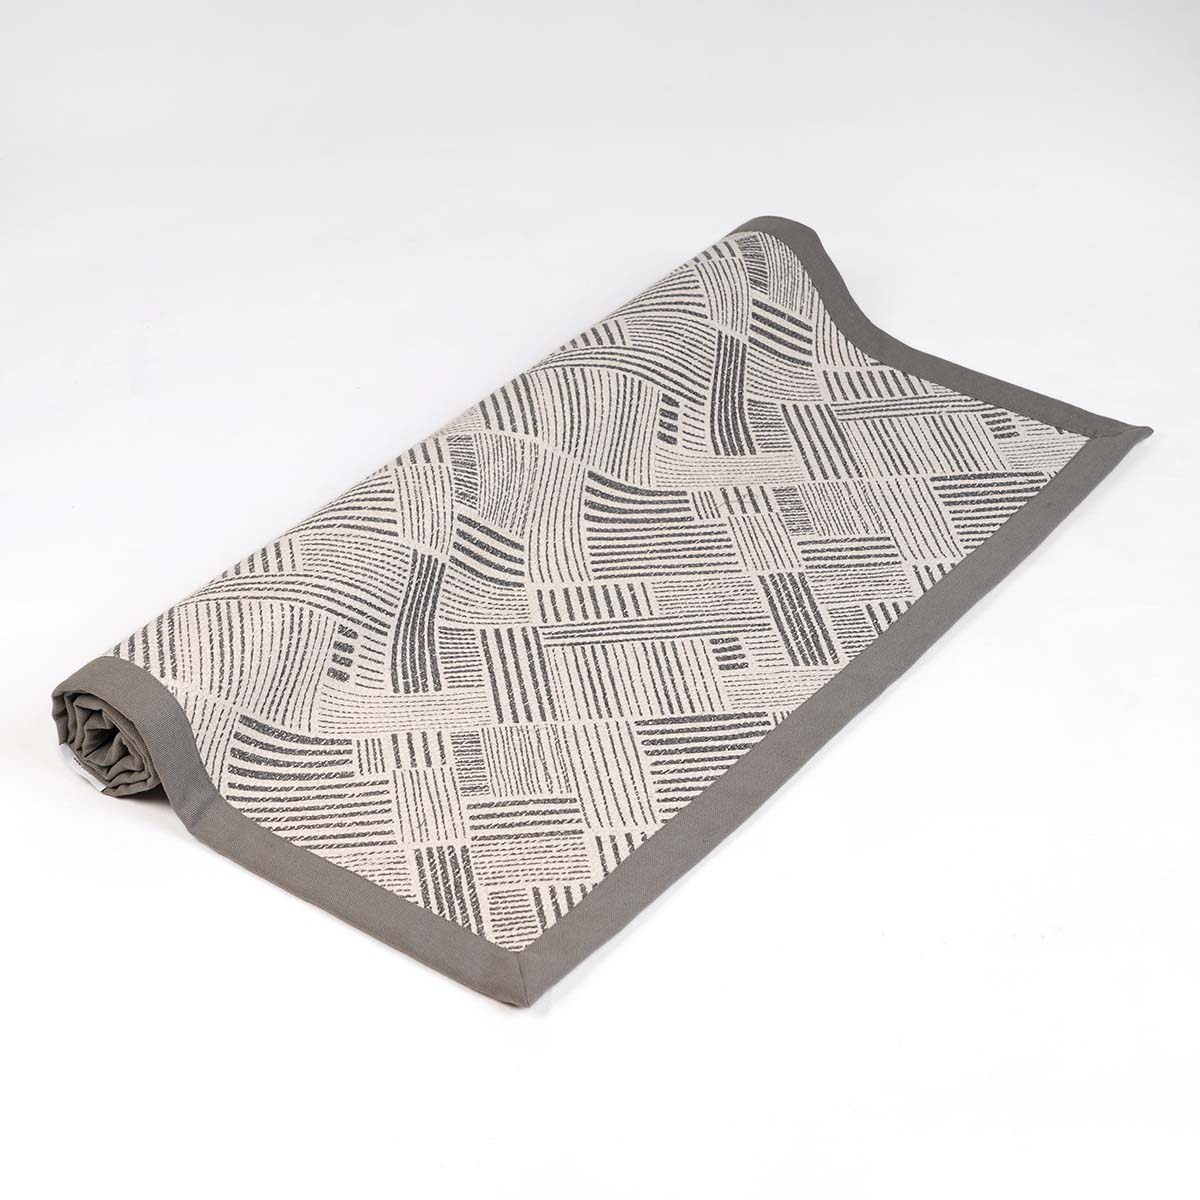 MODERN RETRO - Grey cotton rug, stripe print, mid century modern, sizes available